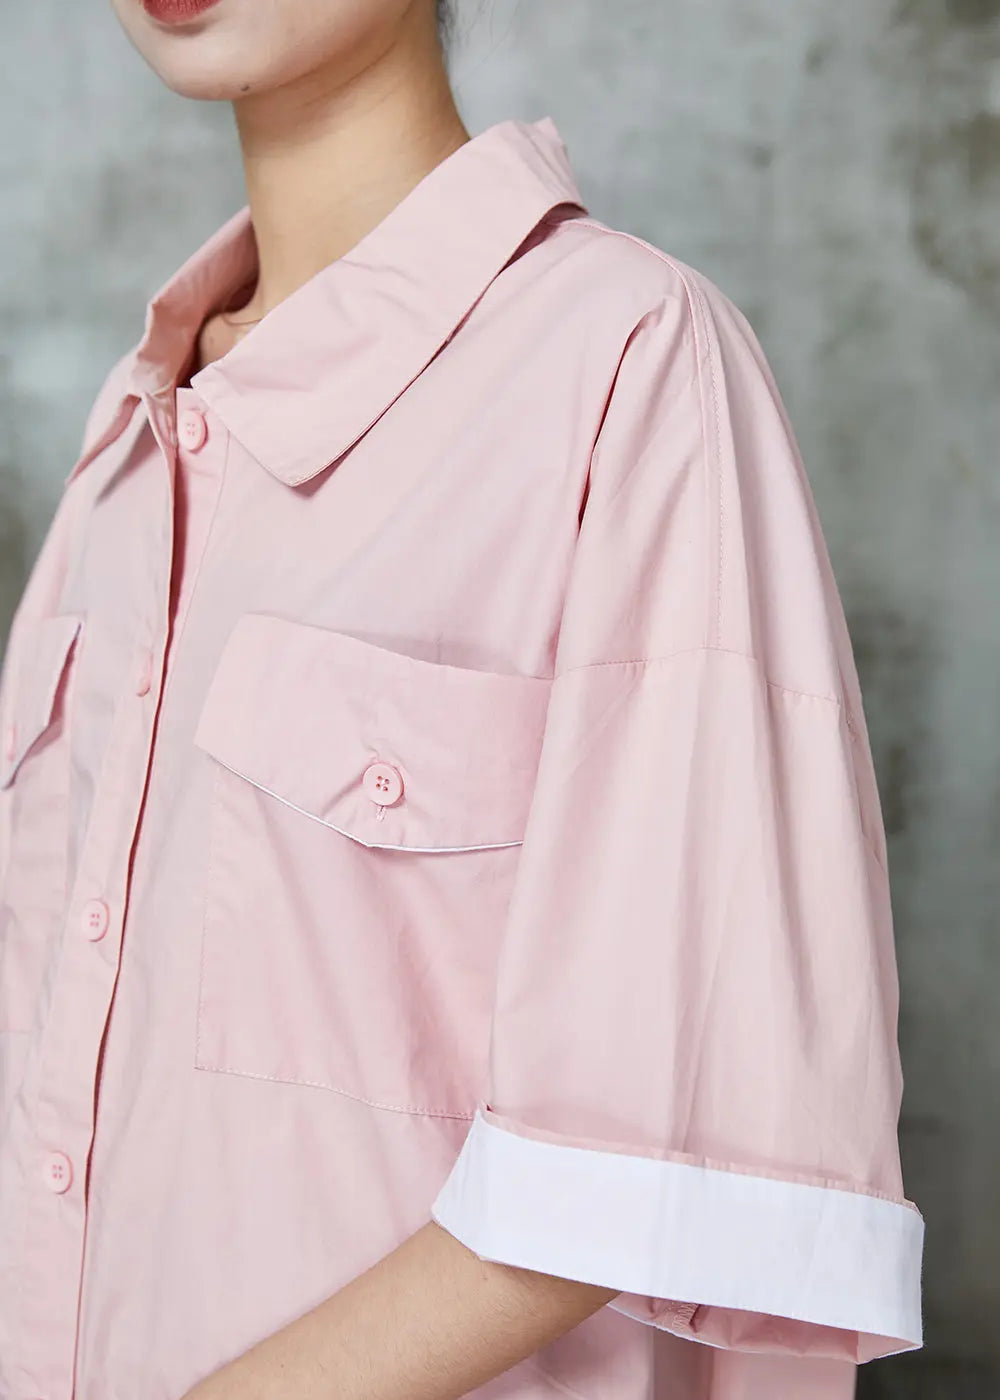 Simple Pink Oversized Cotton Shirt Dress Spring JK1002 Ada Fashion